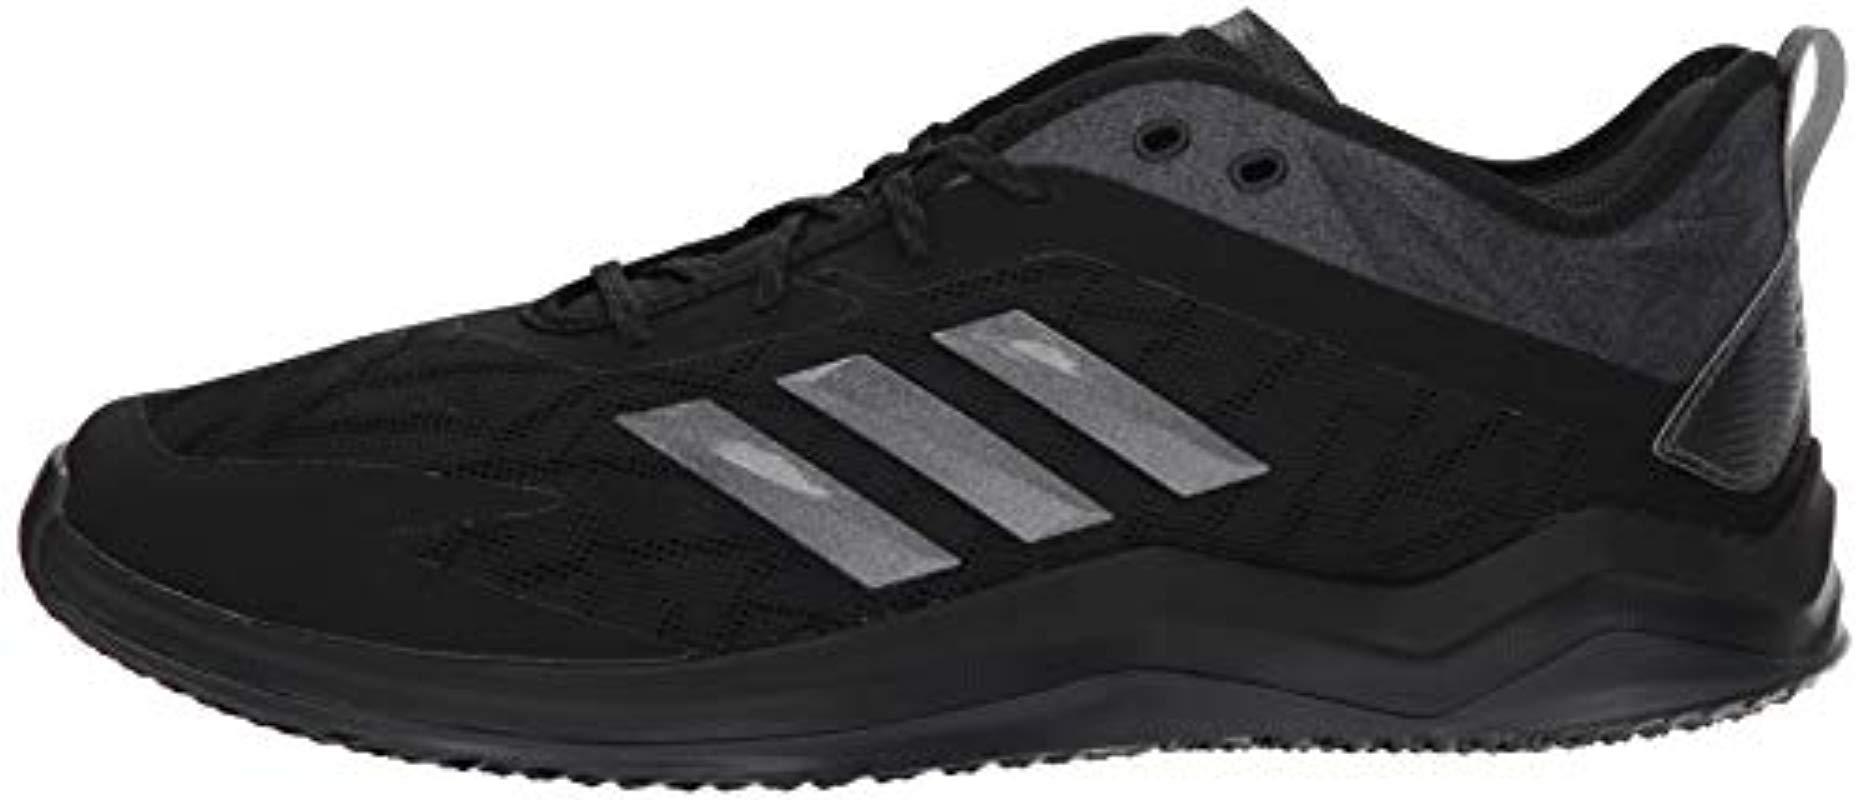 adidas Speed Trainer 4 Baseball Shoe, Black/night Metallic/carbon, 12 M ...